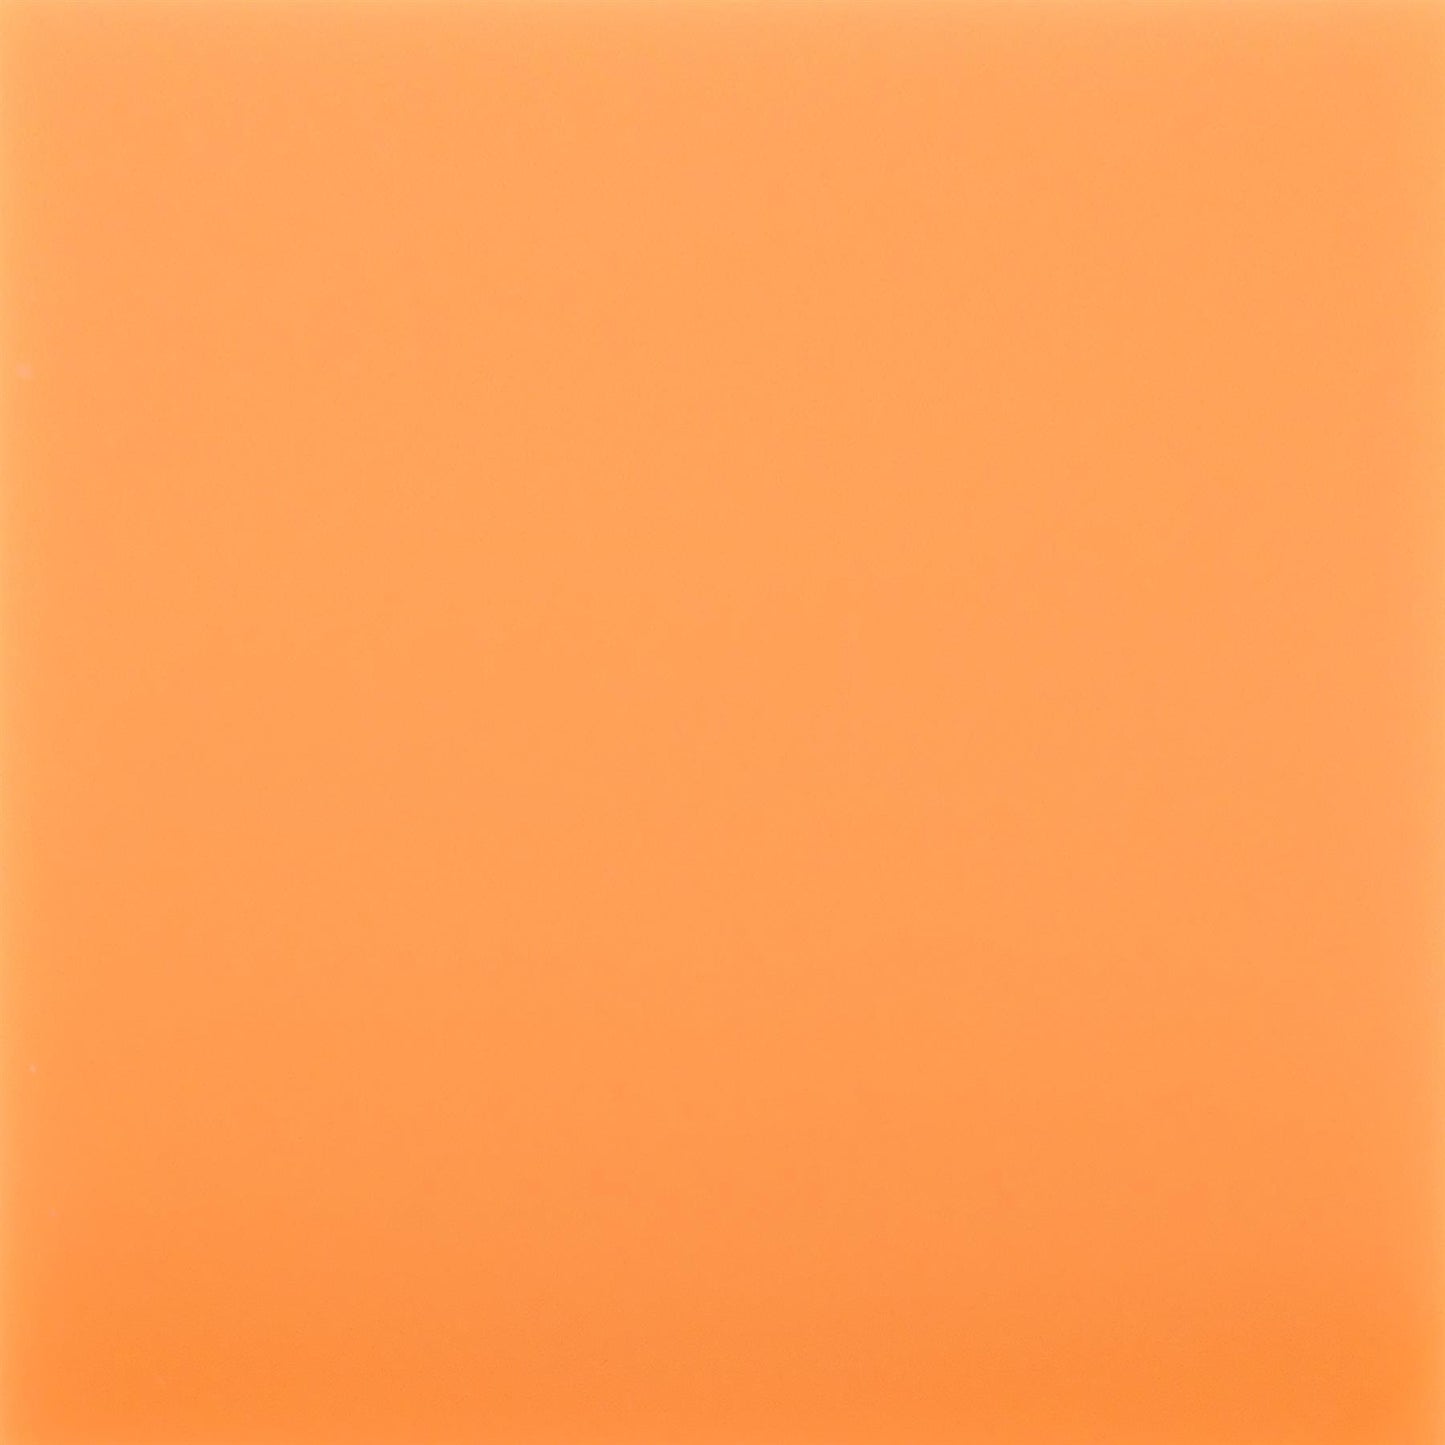 Incudo Orange Fluorescent Acrylic Sheet - 300x200x3mm (11.8x7.87x0.12")